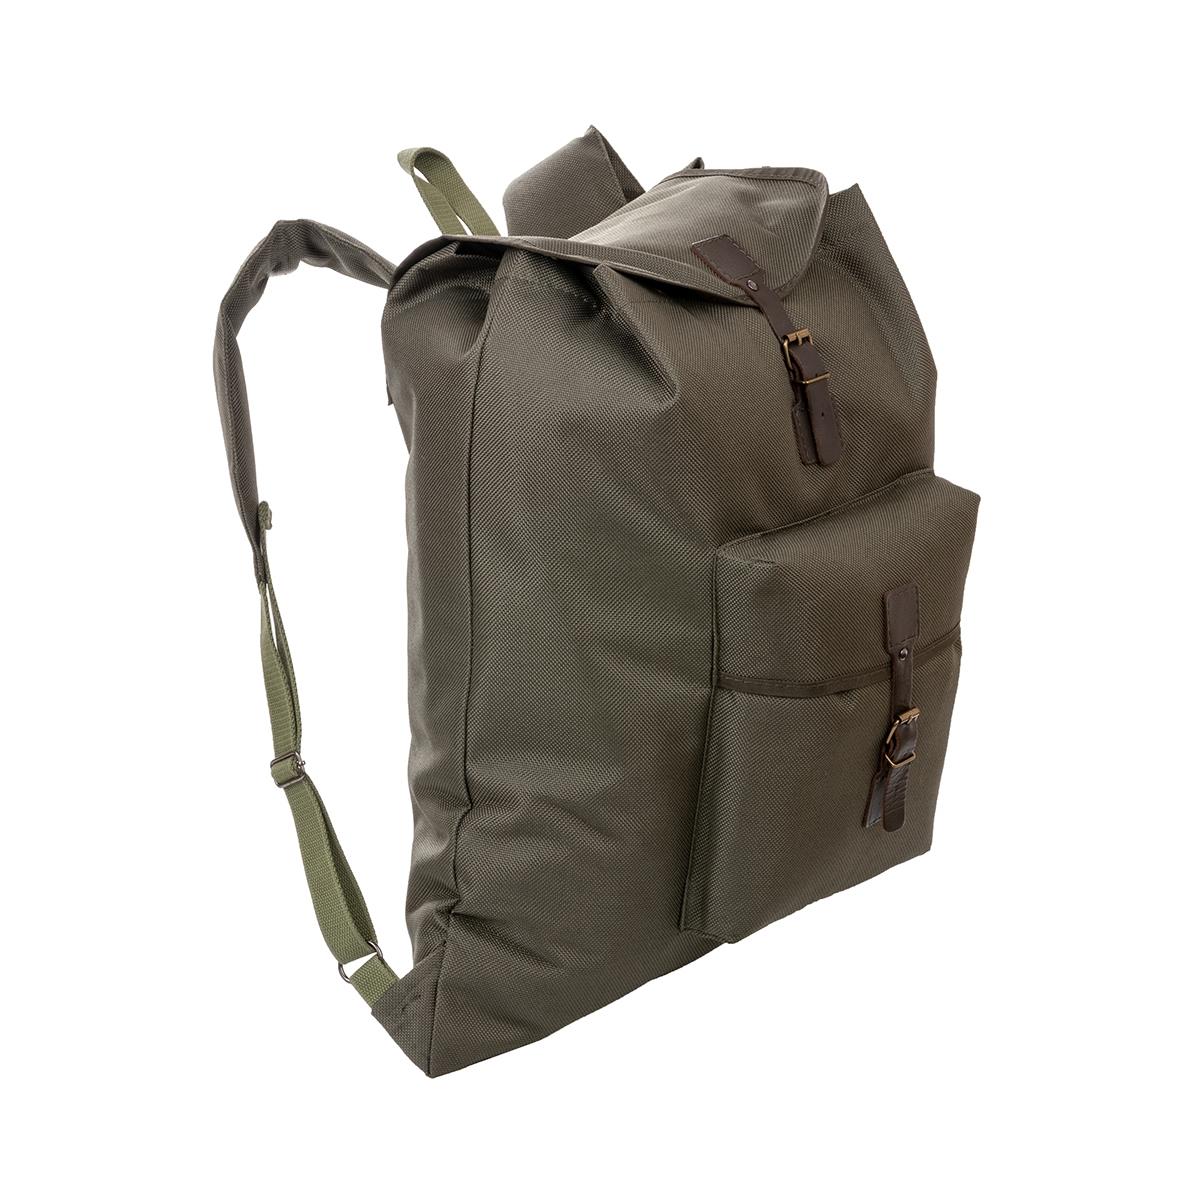 Рюкзак малый (кордура, канвас) (HS-РК-3Нкорд хаки) Helios сумка багет отдел на молнии наружный карман хаки